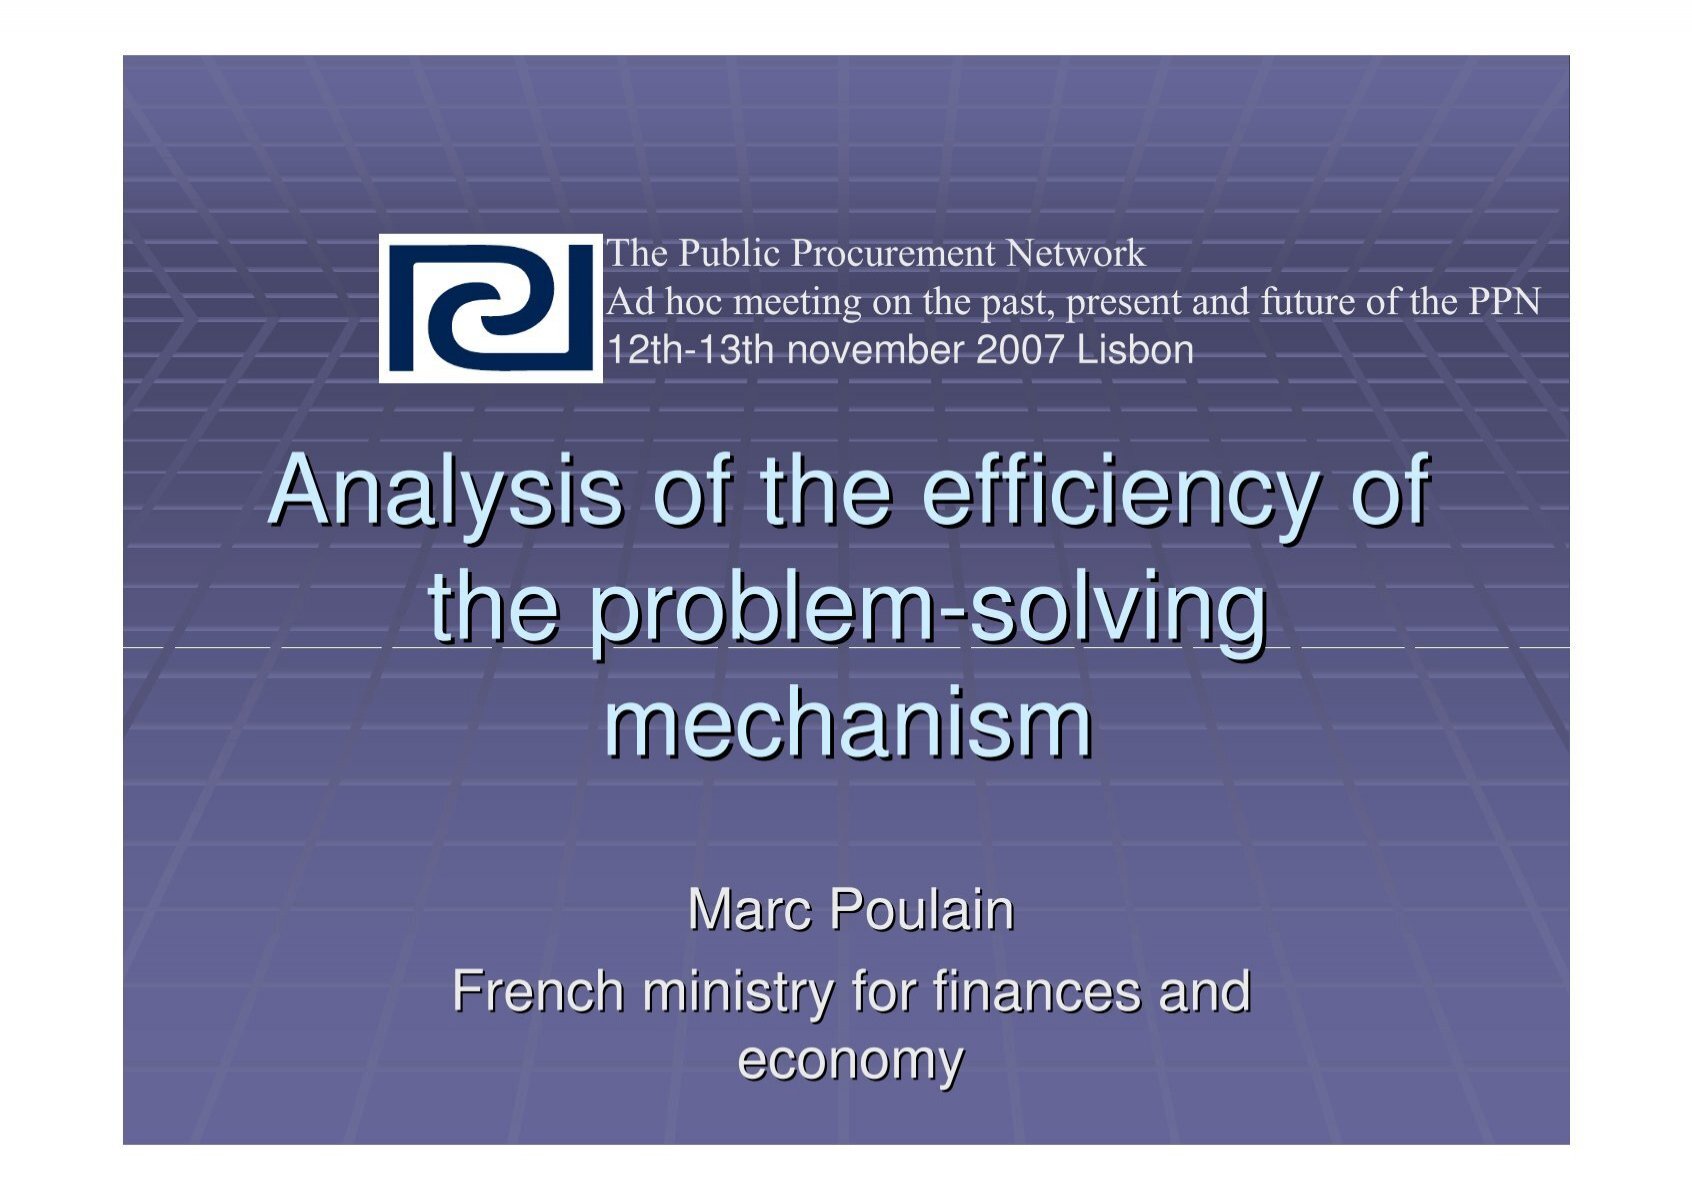 problem solving mechanism in public administration